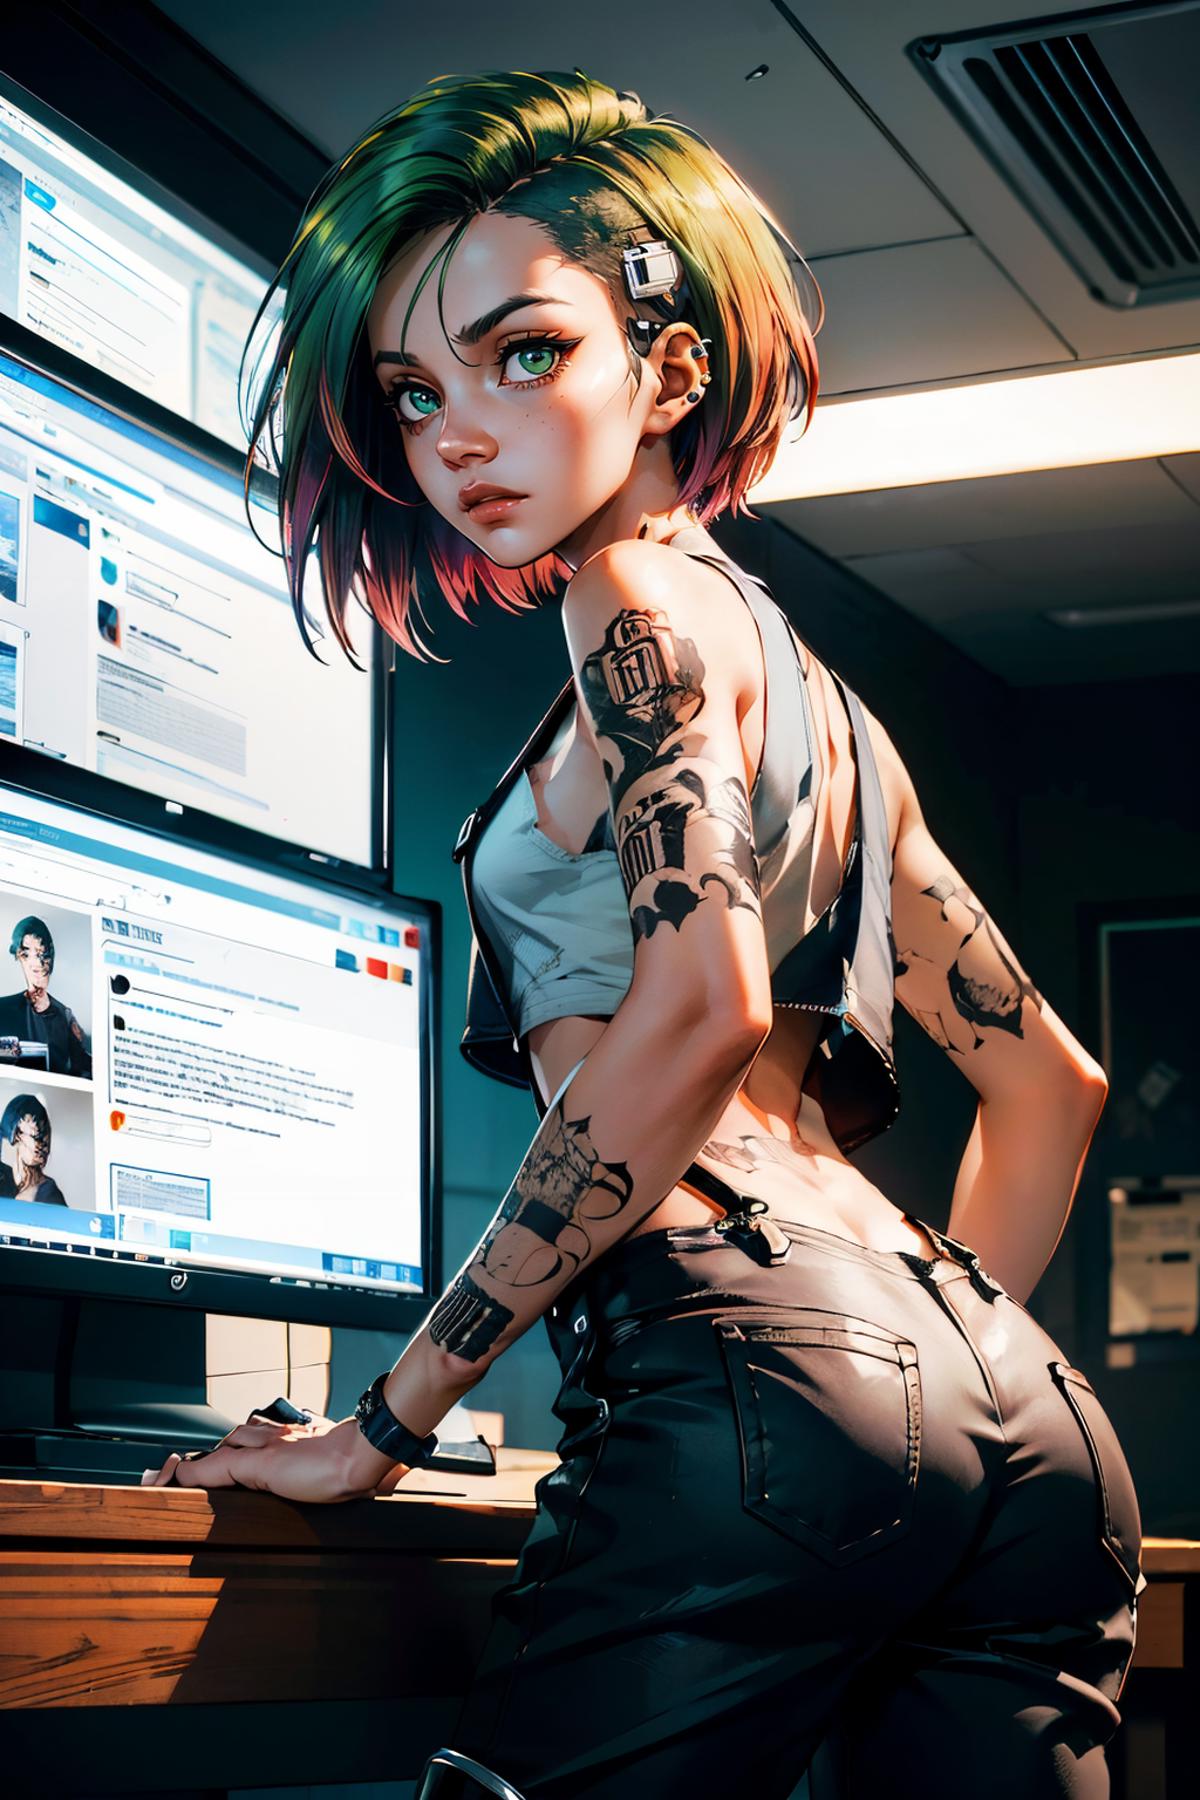 Judy Alvarez from Cyberpunk 2077 image by wikkitikki